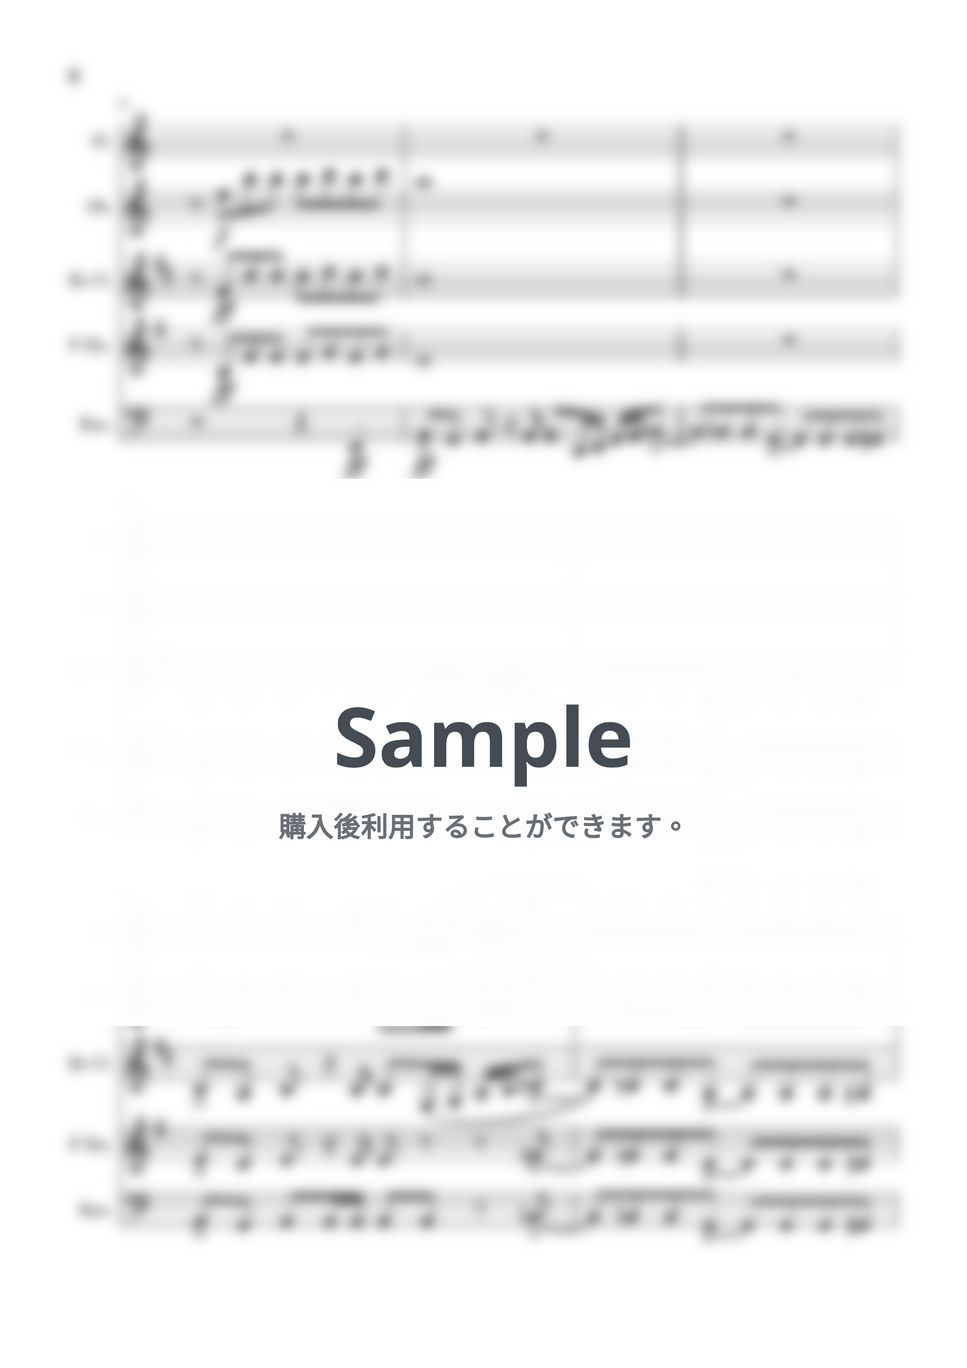 ayase - 祝福【木管五重奏】 (スコア+パート譜) by いたちの楽譜屋さん